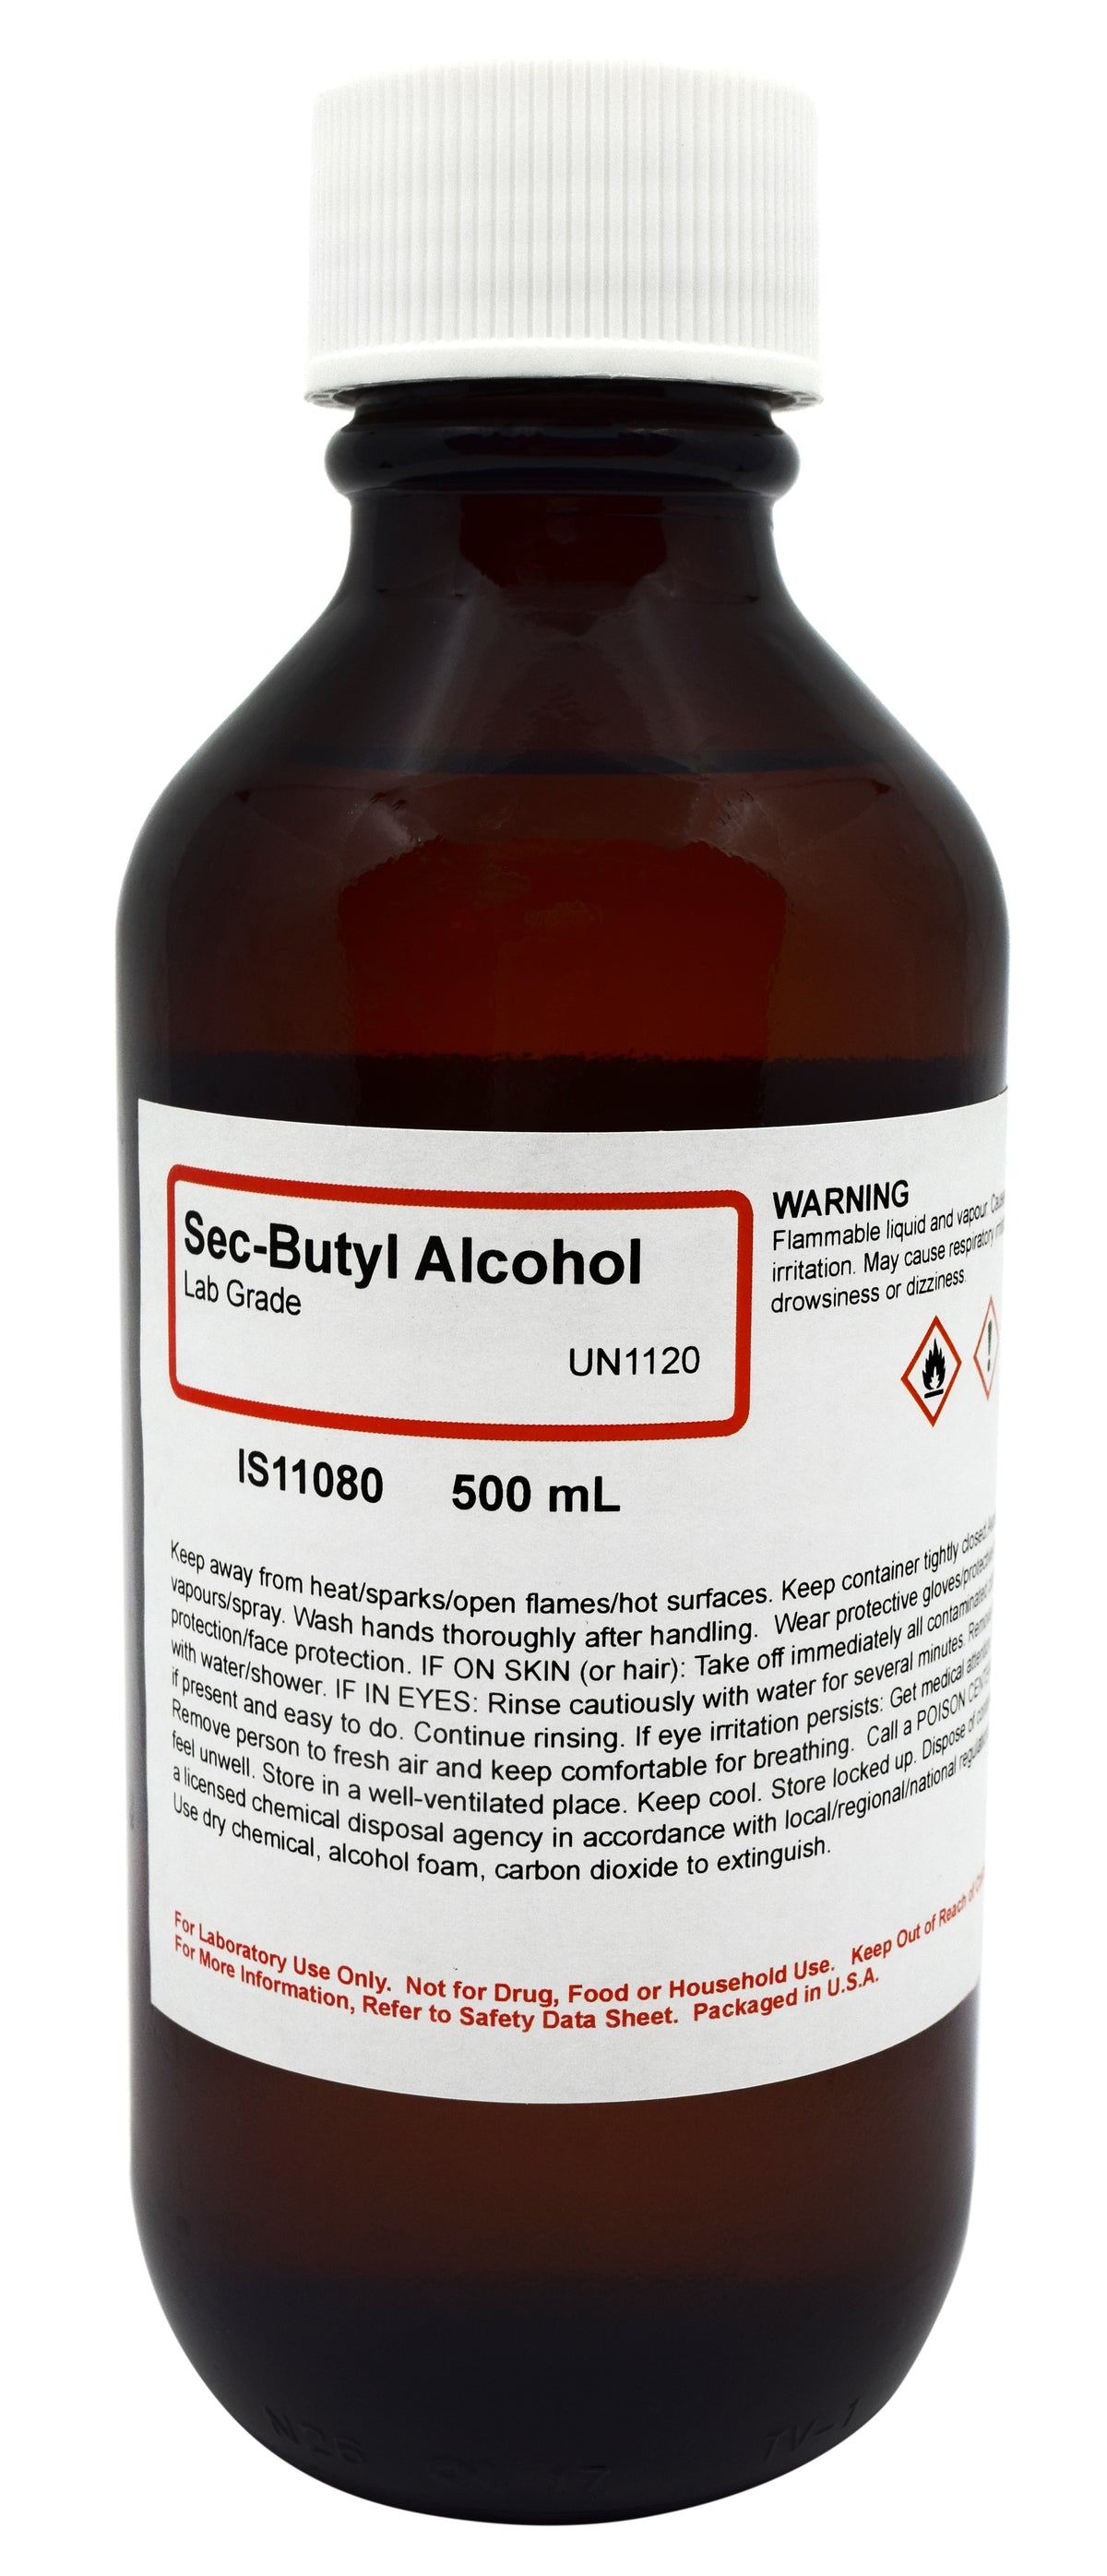 tert-Butyl Alcohol 99% ACS Grade